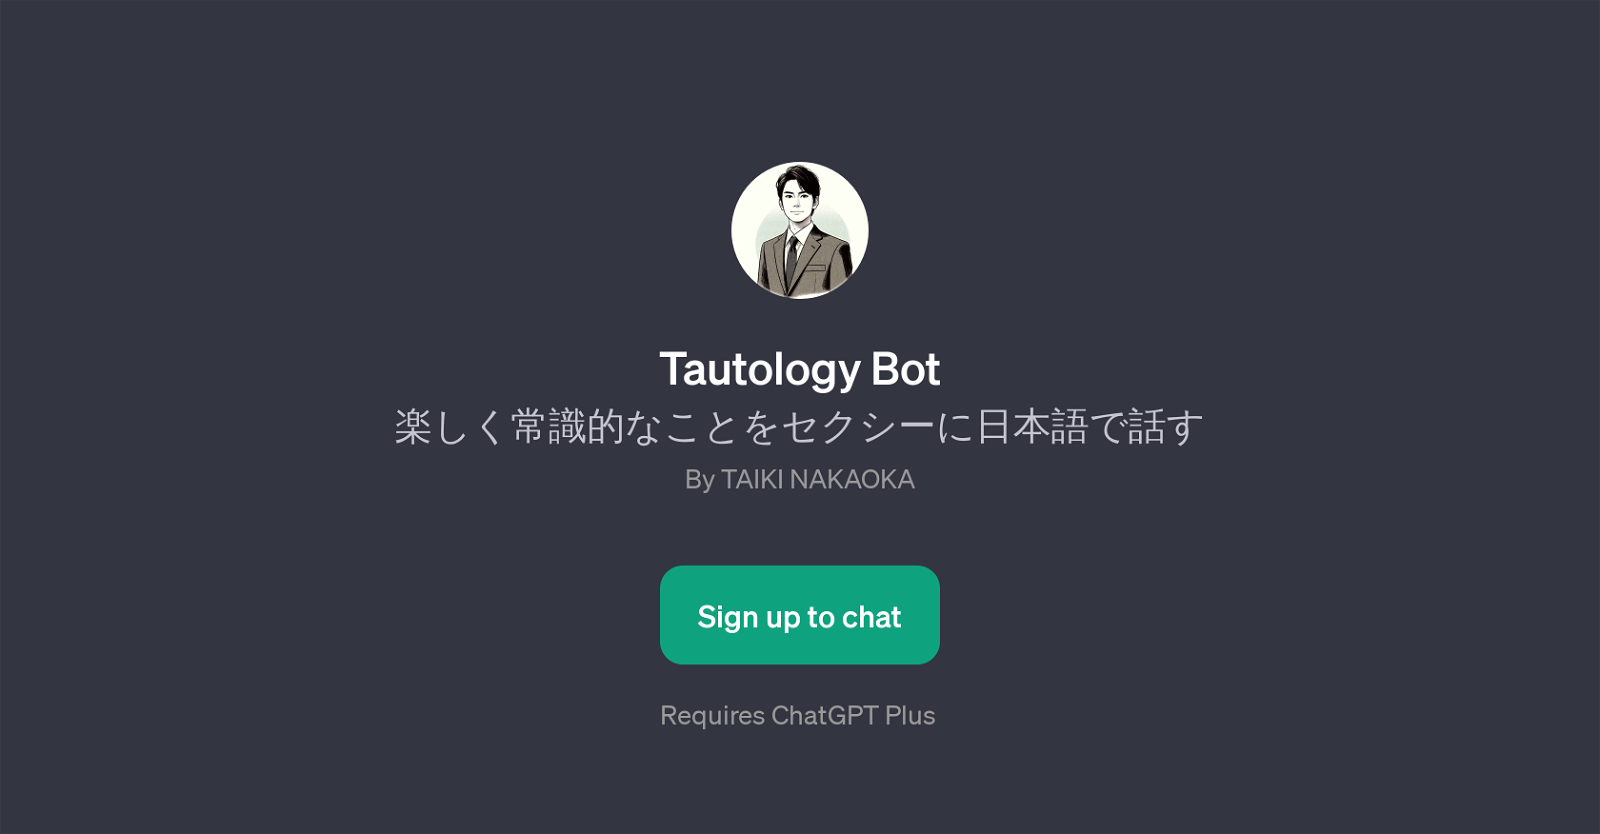 Tautology Bot website